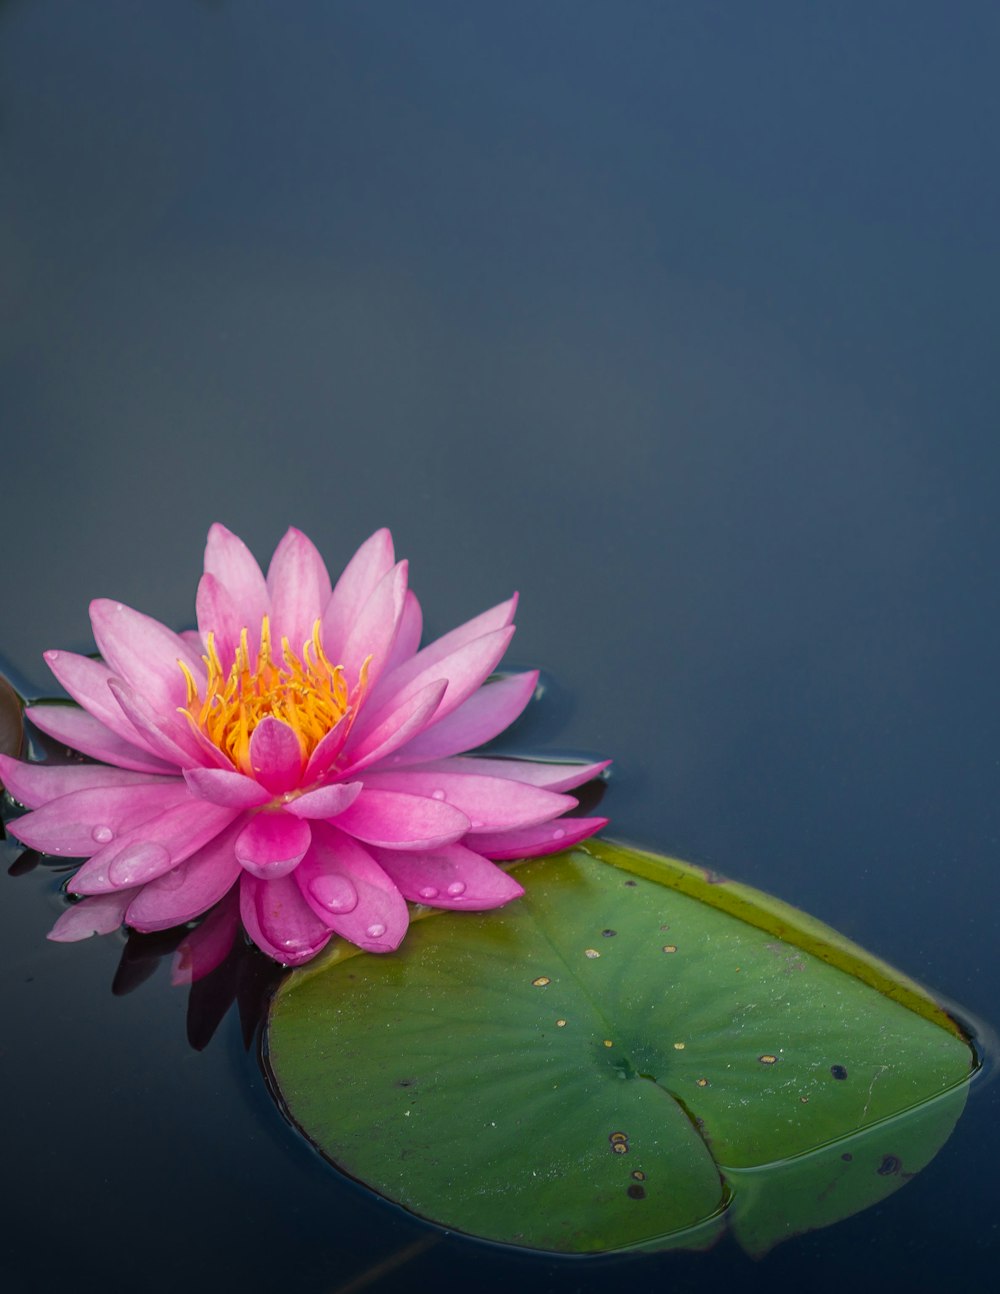 Rosa Lotusblume auf Gewässer